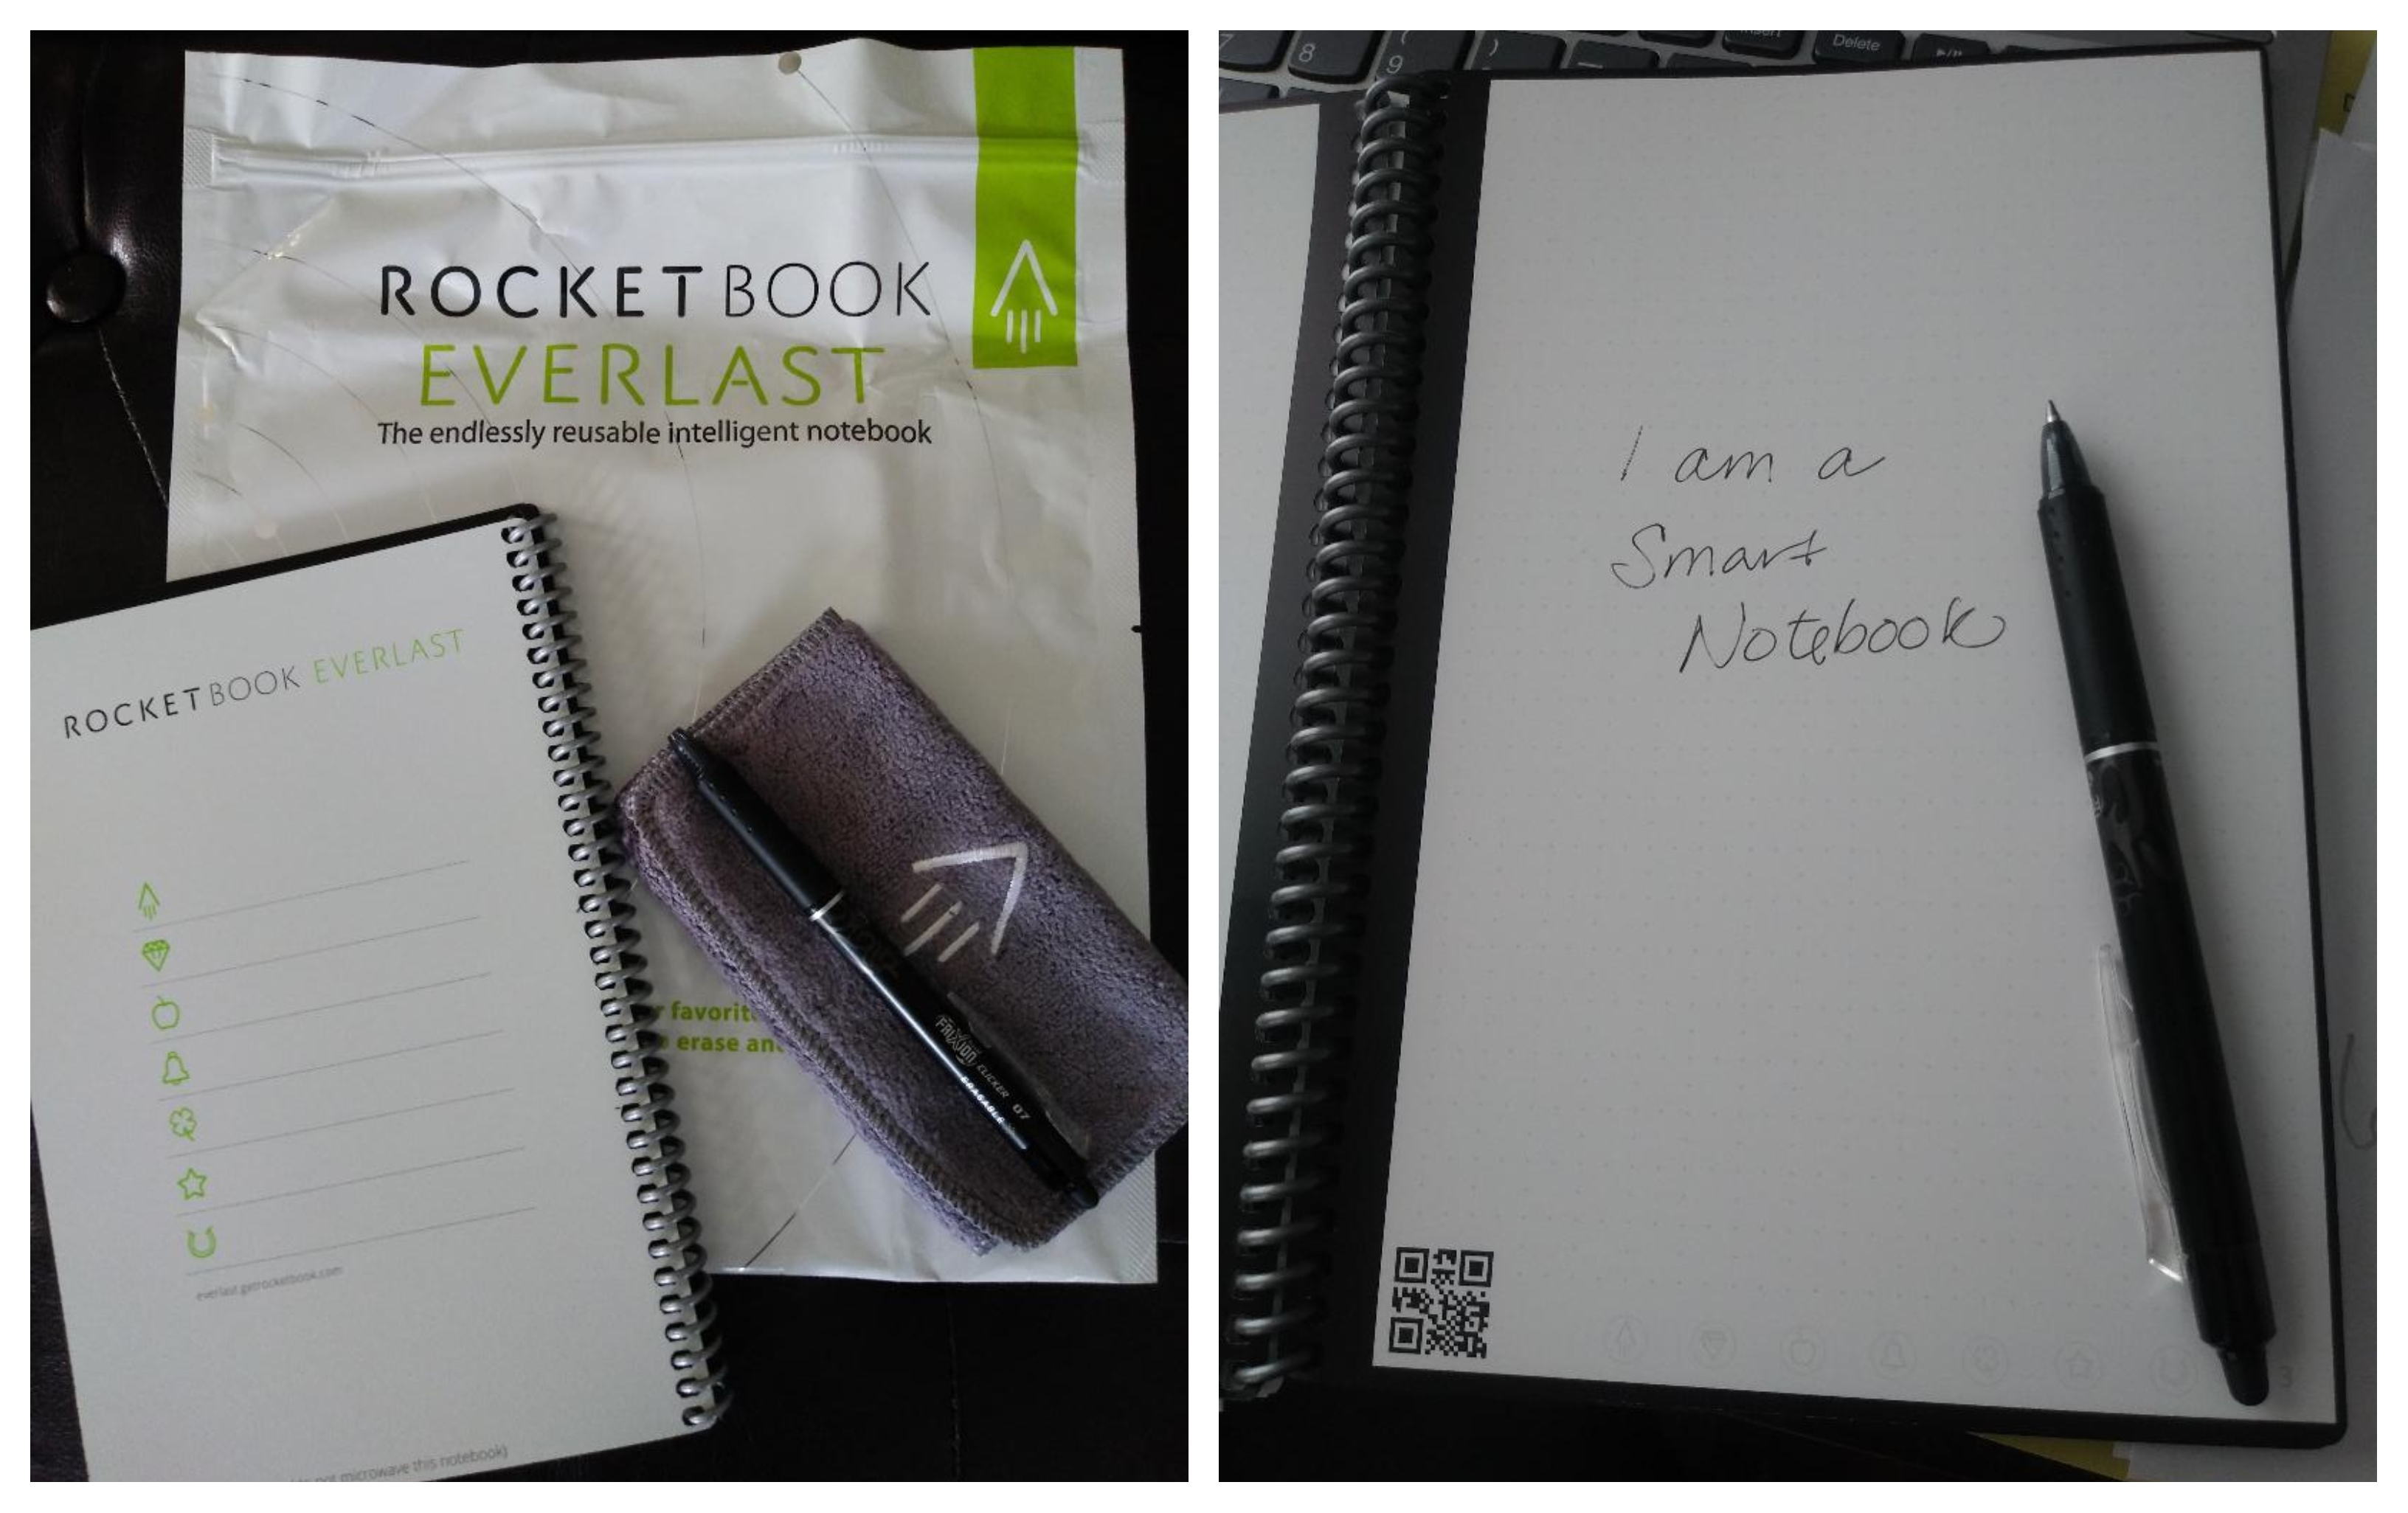 Everlast notebook by Rocketbook